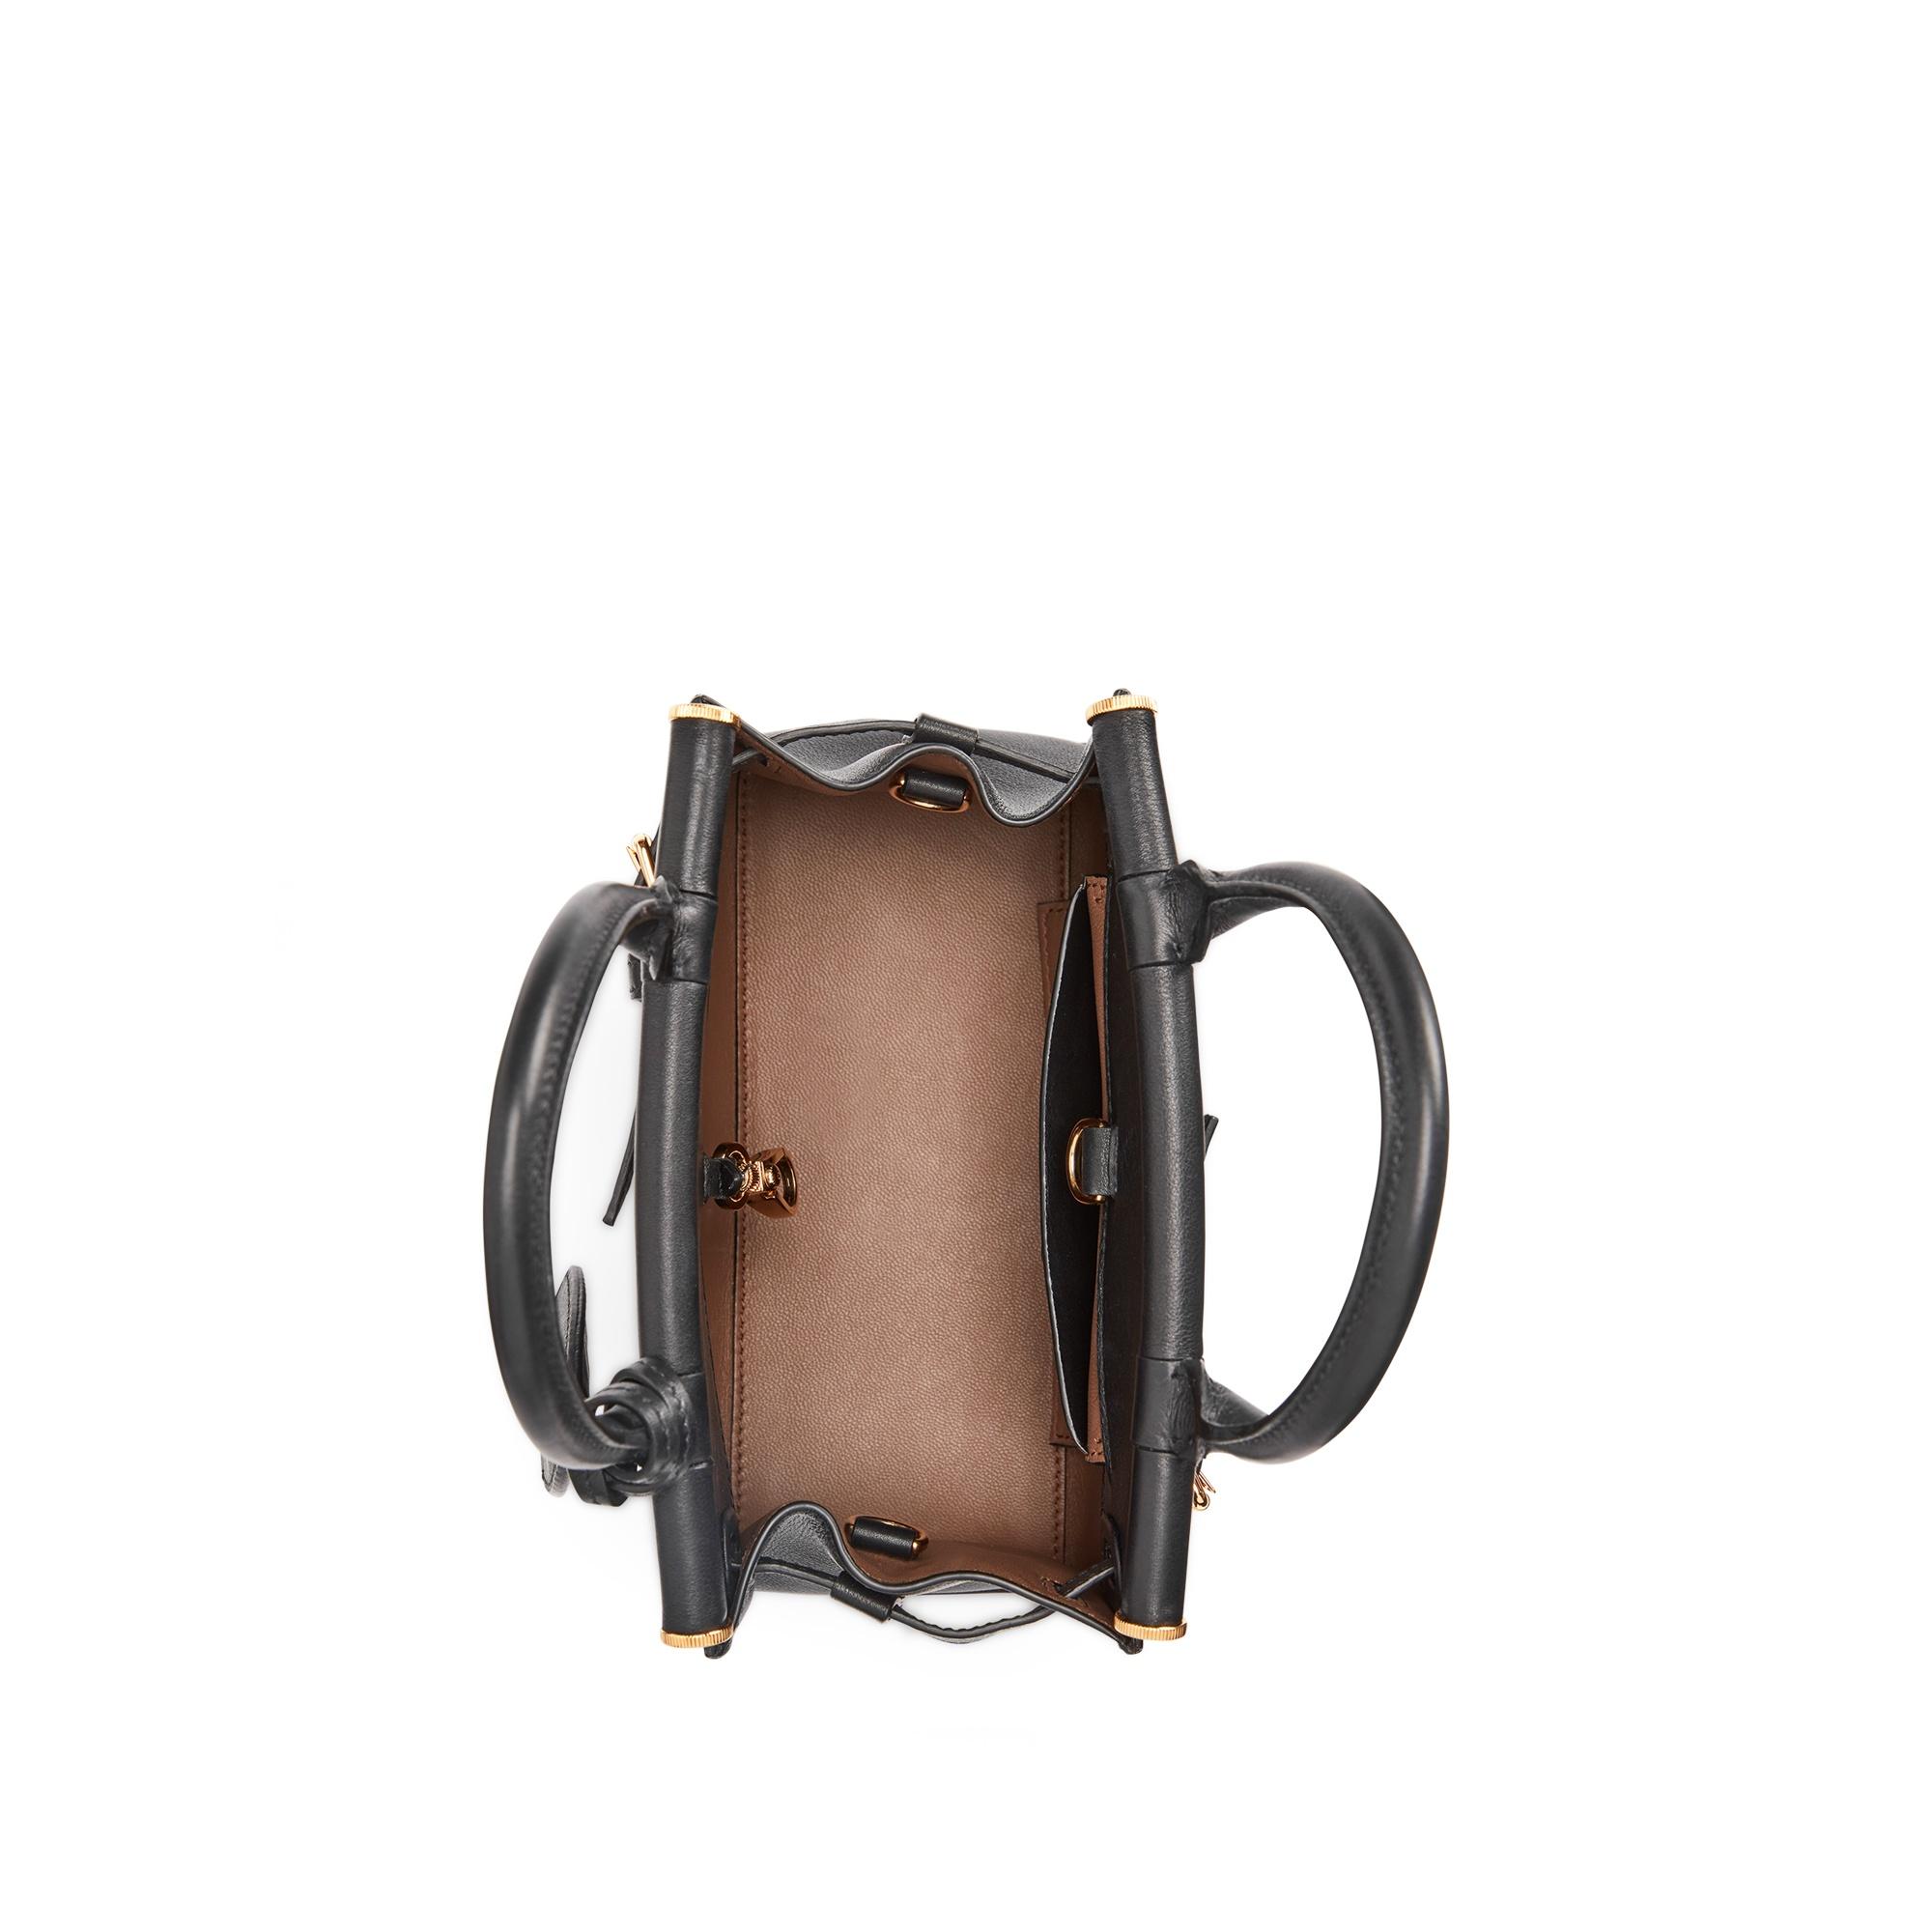 Ralph Lauren Calfskin Mini Rl50 Handbag in Black - Lyst